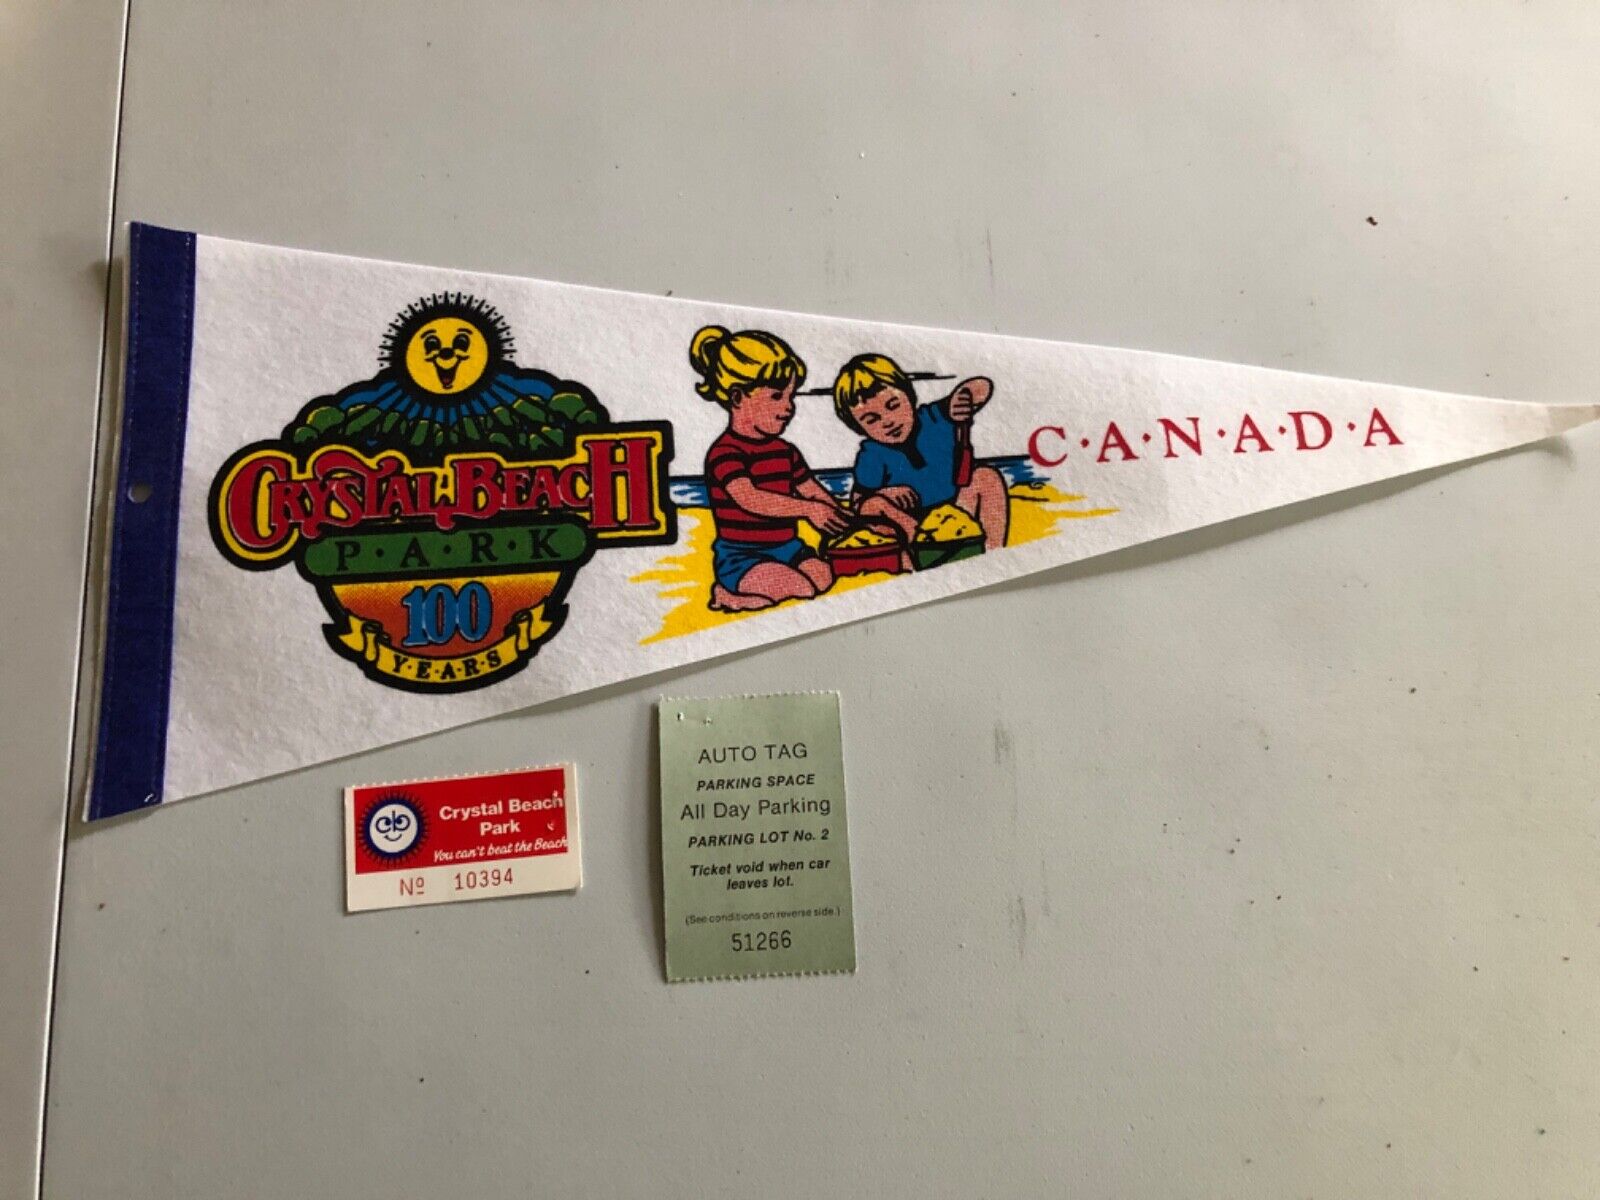 Vintage Canadian Amusement Park Crystal Beach, Ontario pennant,tickets